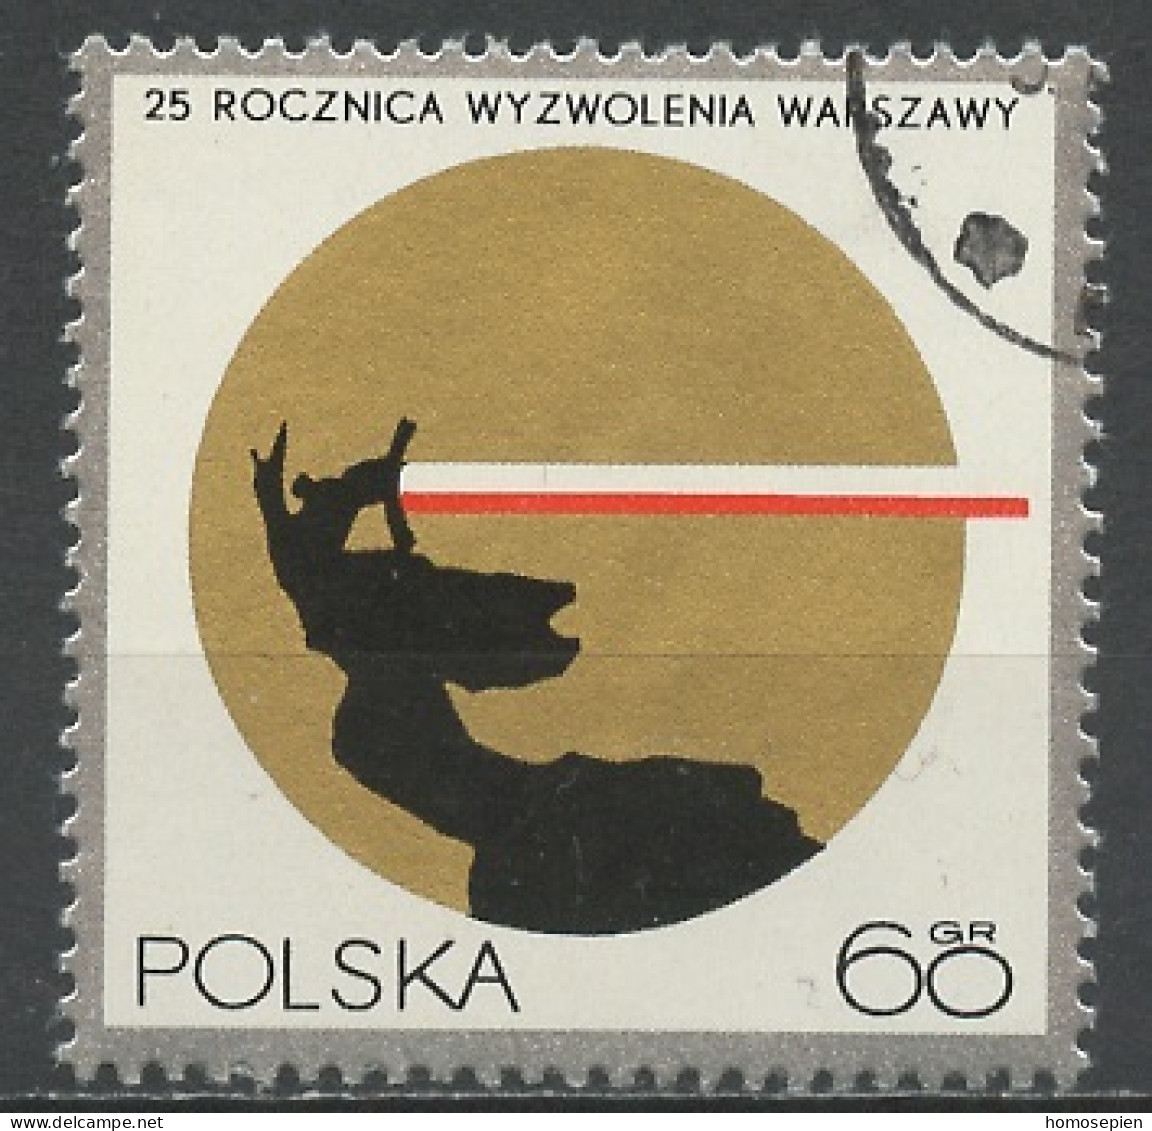 Pologne - Poland - Polen 1970 Y&T N°1836 - Michel N°1986 (o) - 60g  Libération De Varsovie - Used Stamps